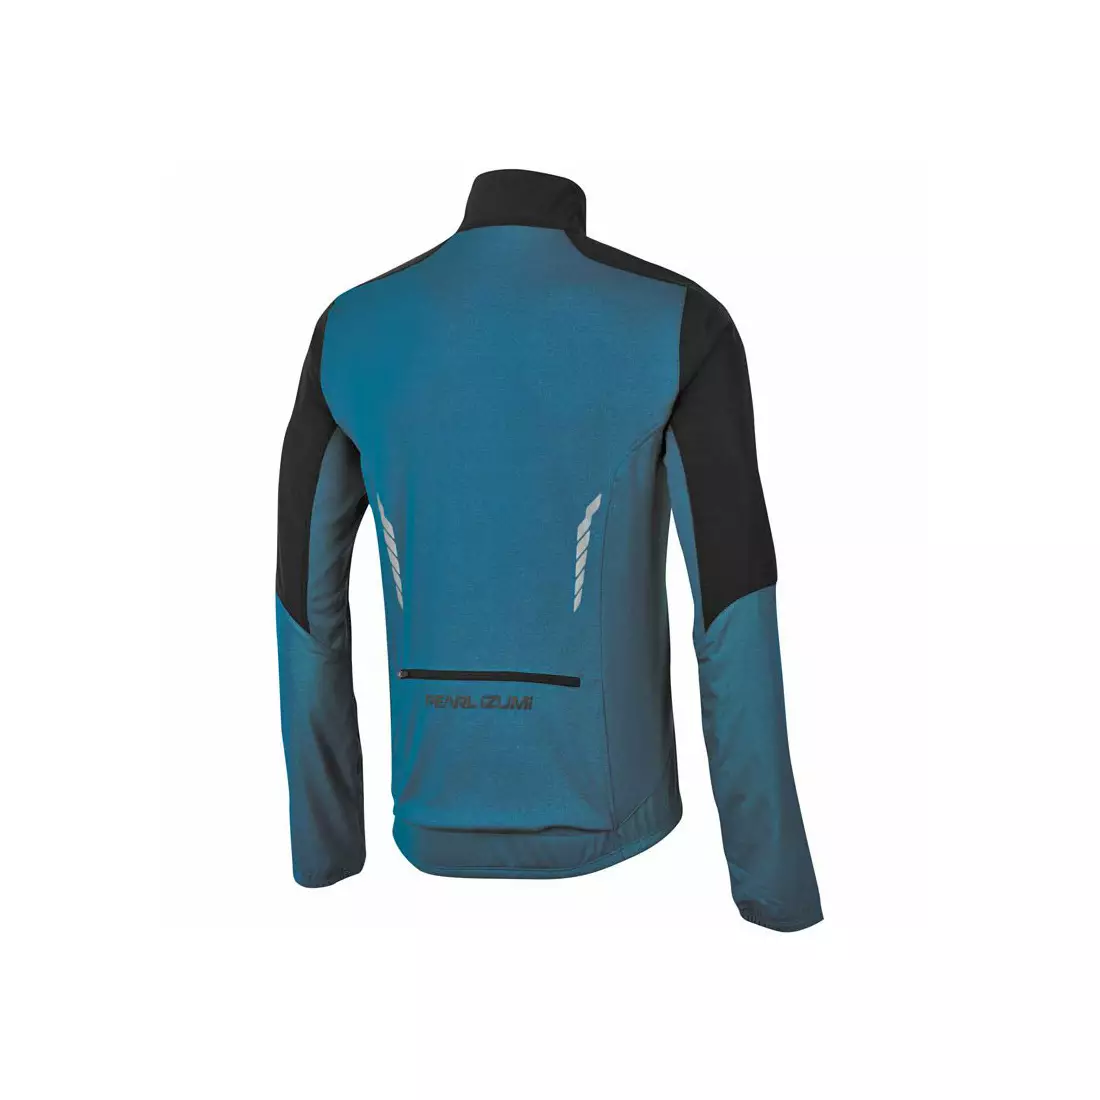 PEARL IZUMI Select Thermal Barrier 11131411-4EK - men's cycling jacket, color: black and blue